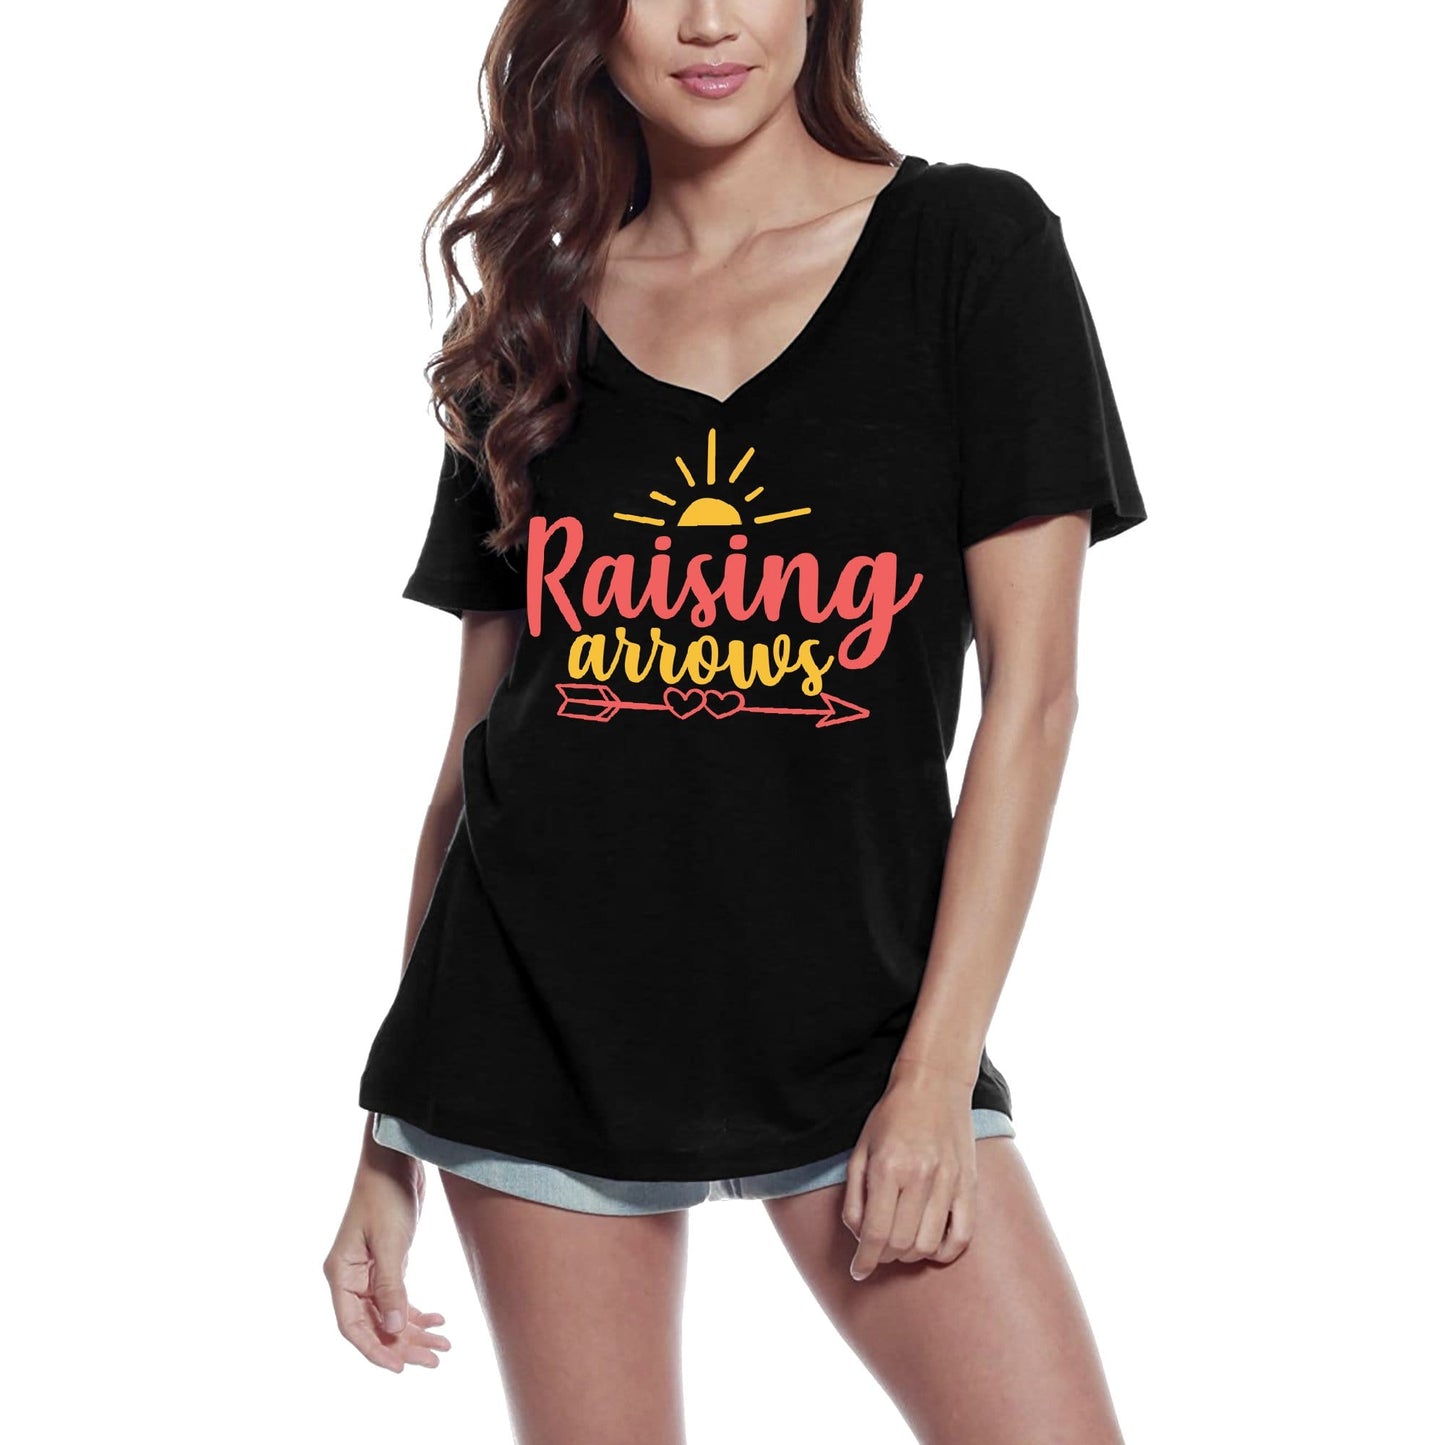 ULTRABASIC Women's T-Shirt Raising Arrows - Short Sleeve Tee Shirt Gift Tops